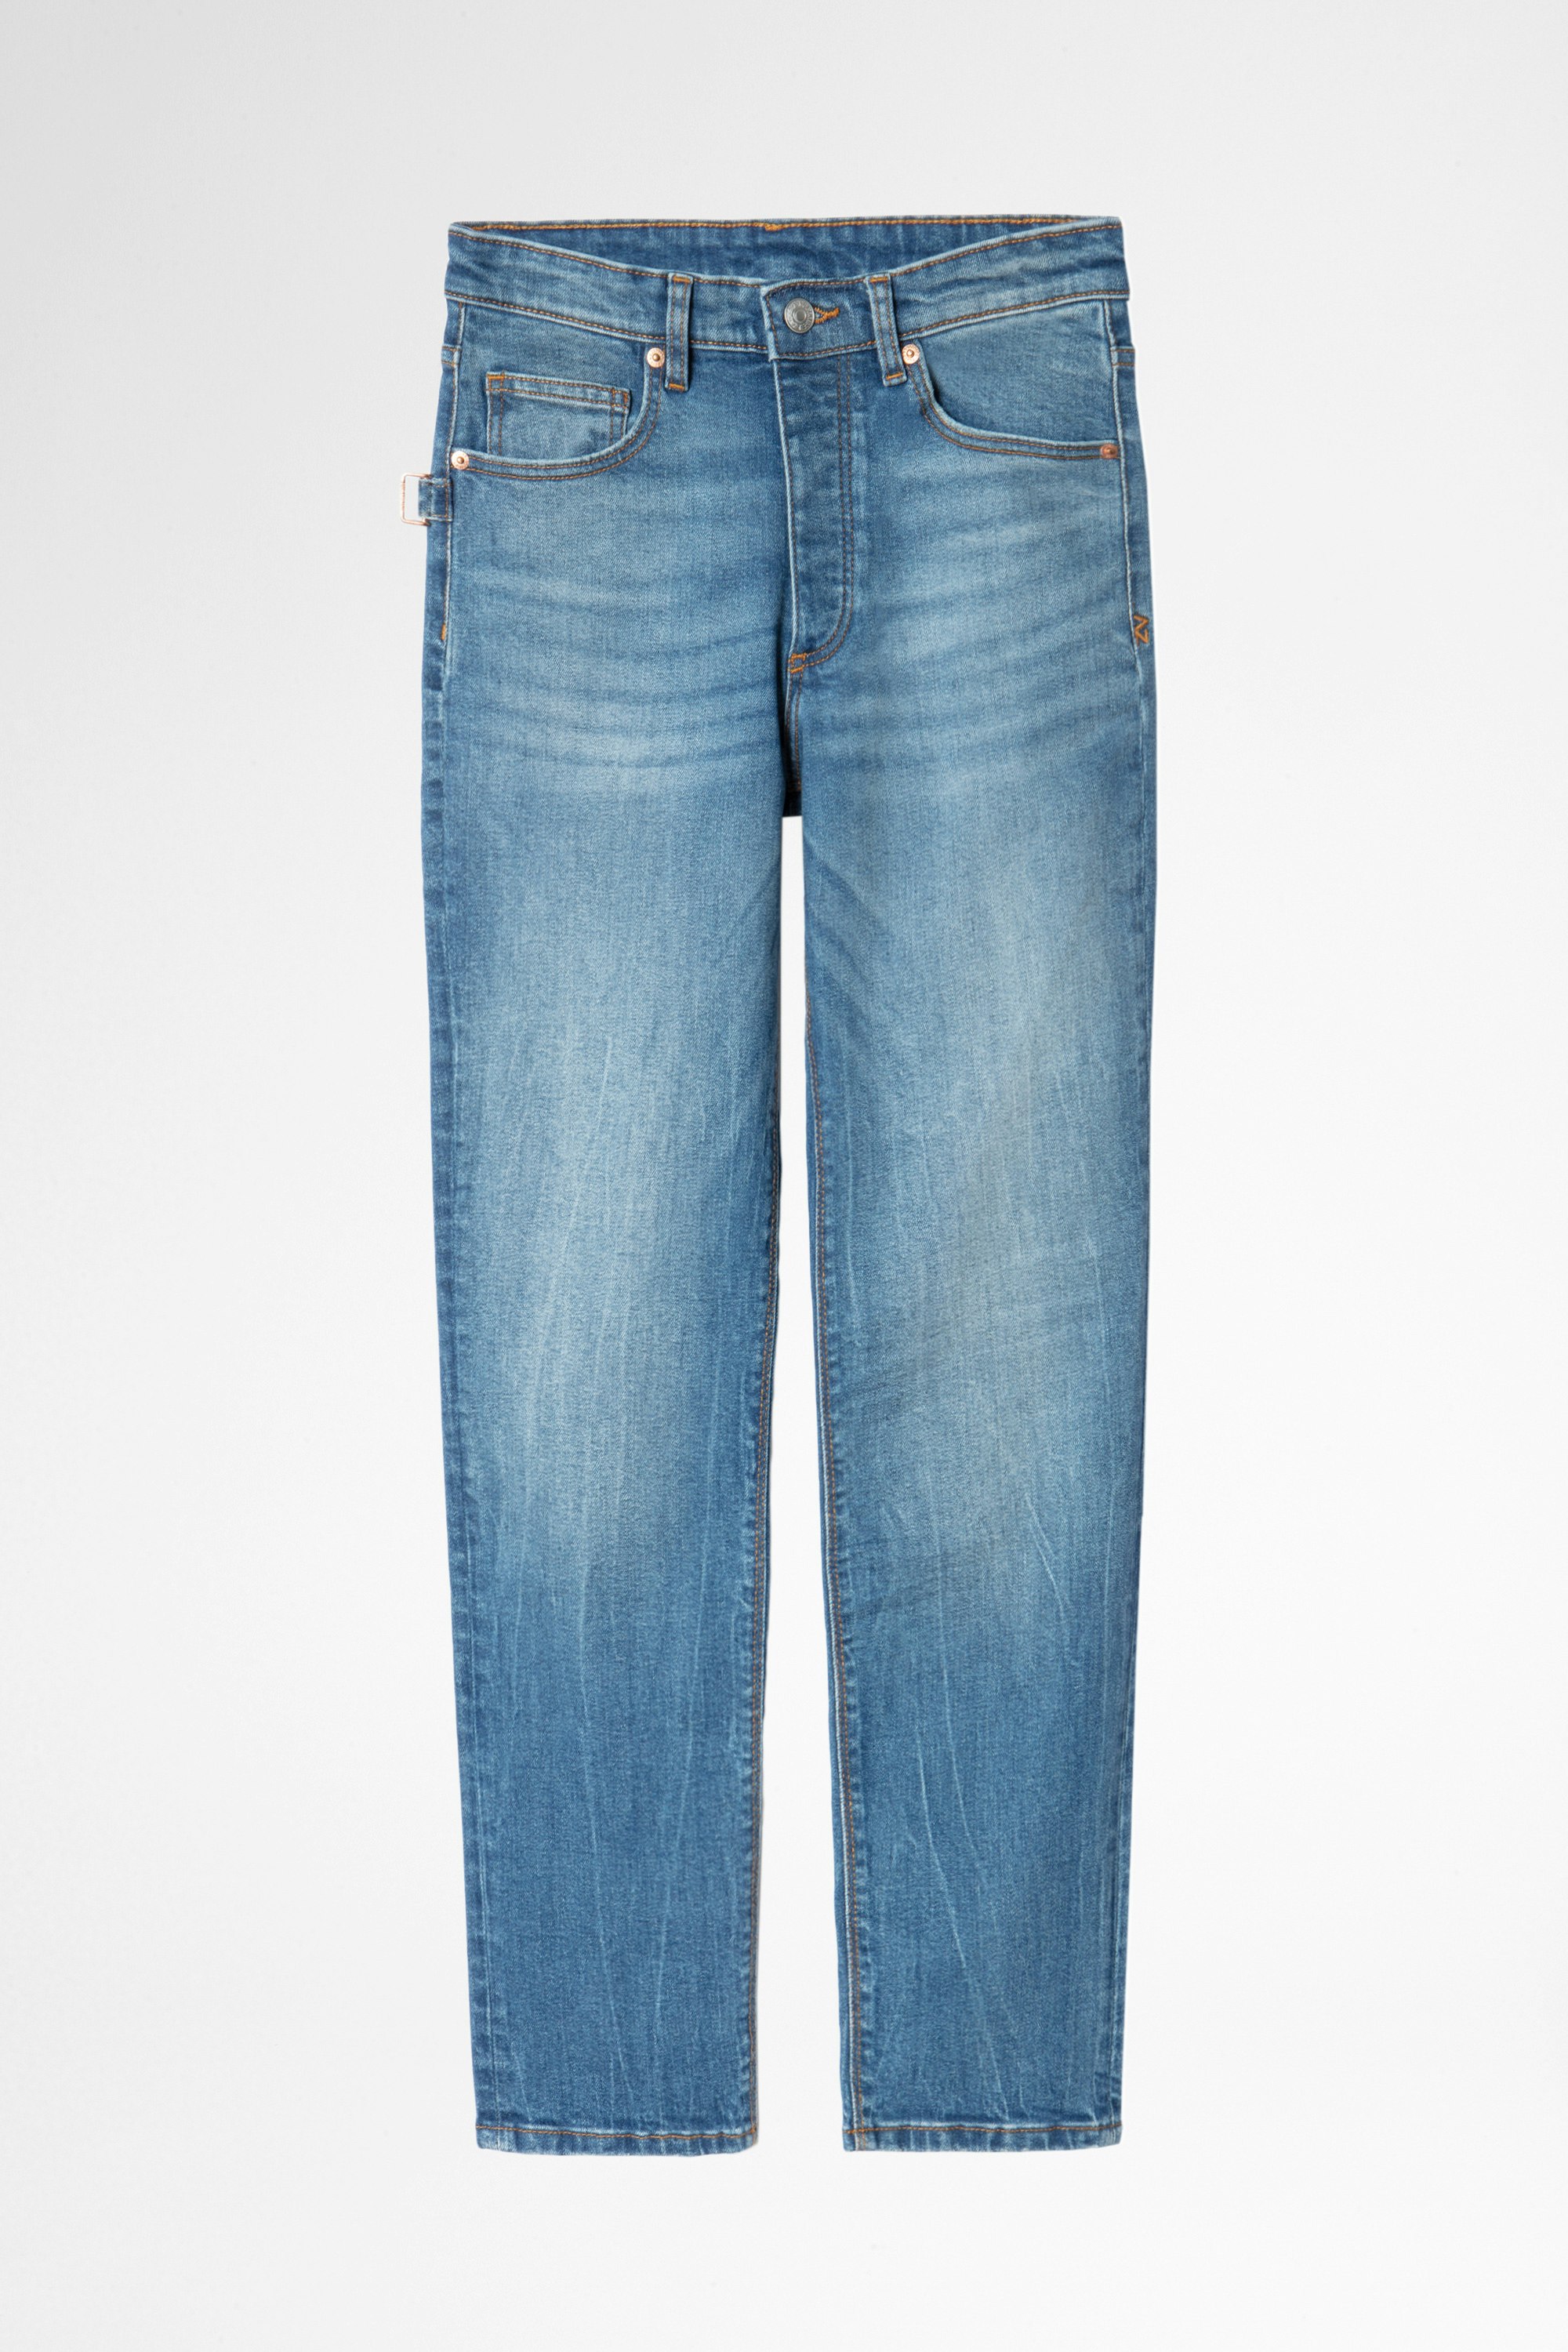 Mamma Light Jeans Women’s faded blue cotton denim jeans